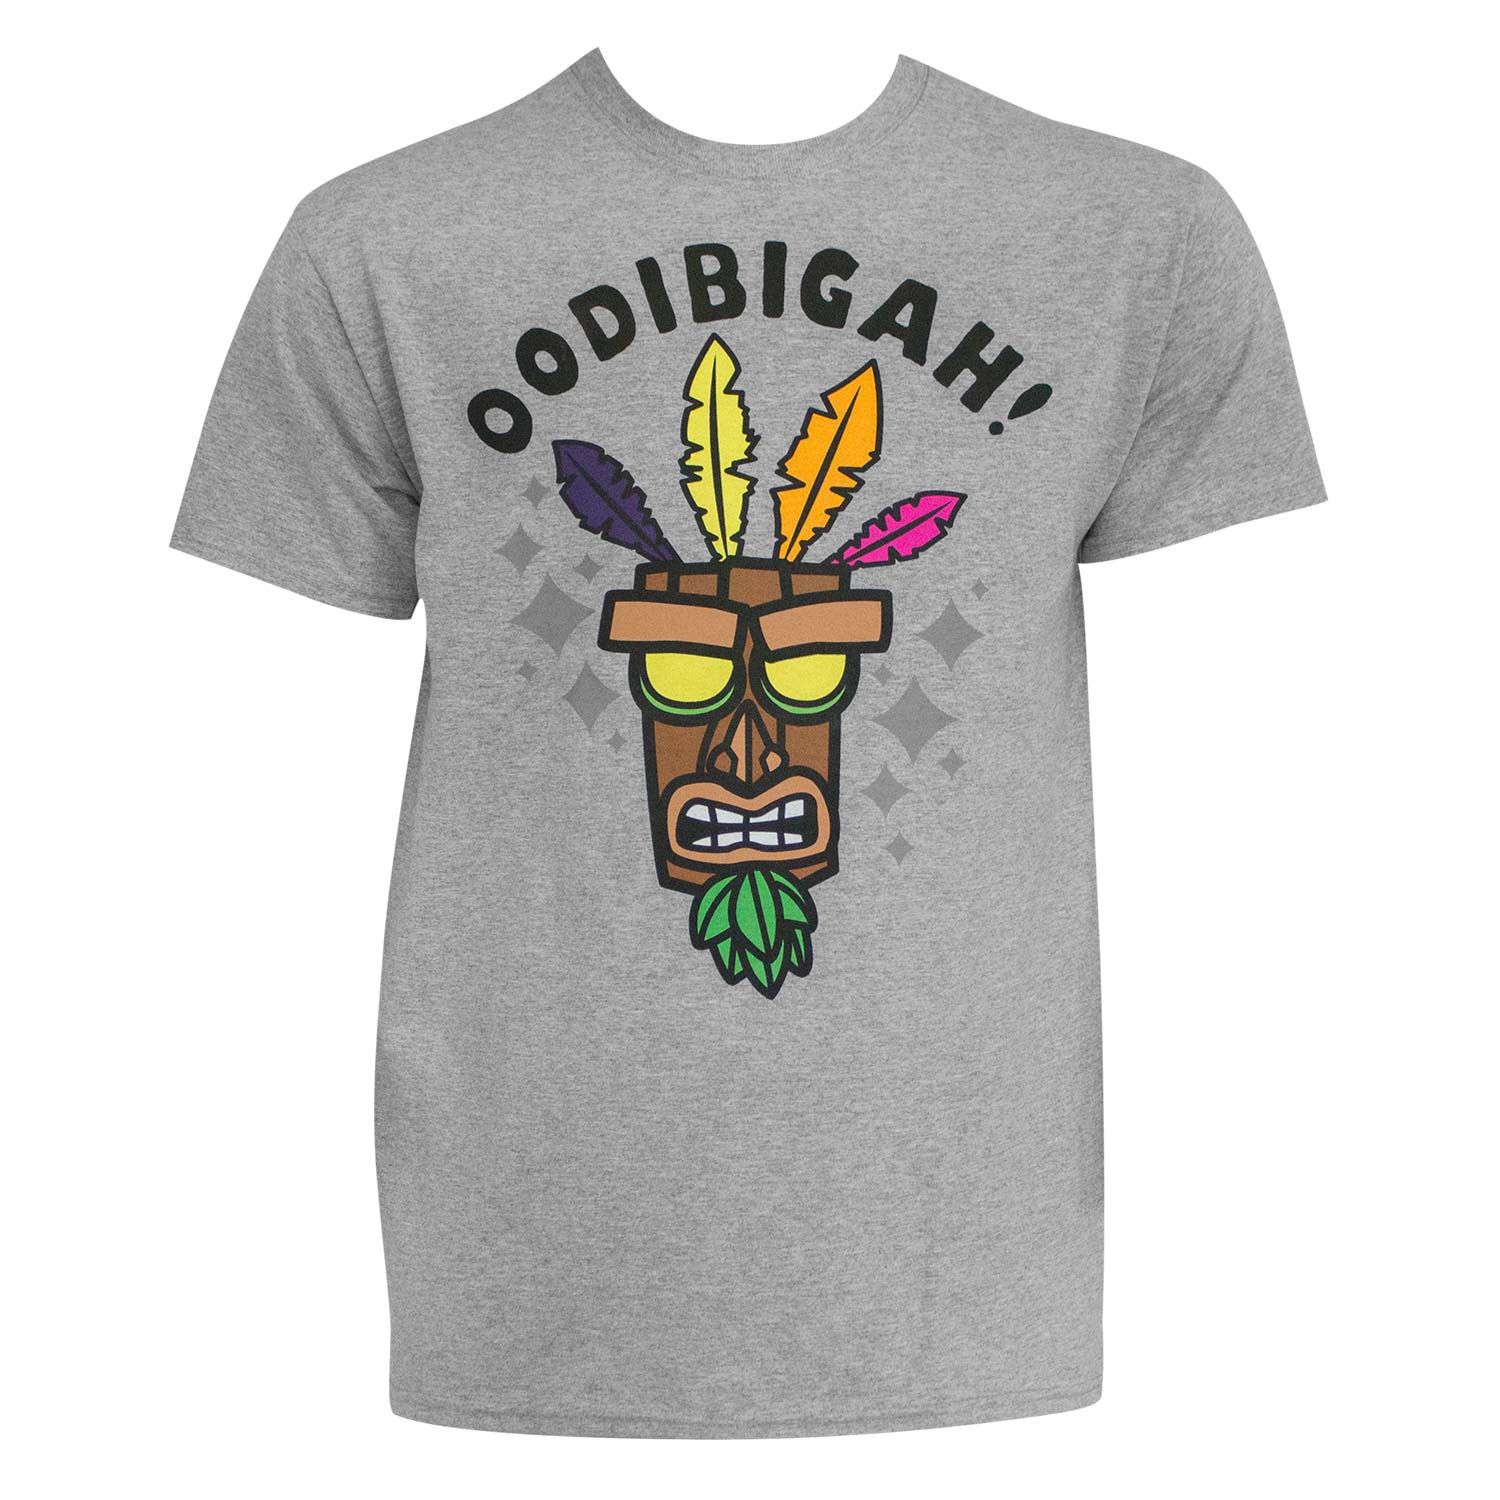 Crash Bandicoot Oodibigah Grey Tee Shirt